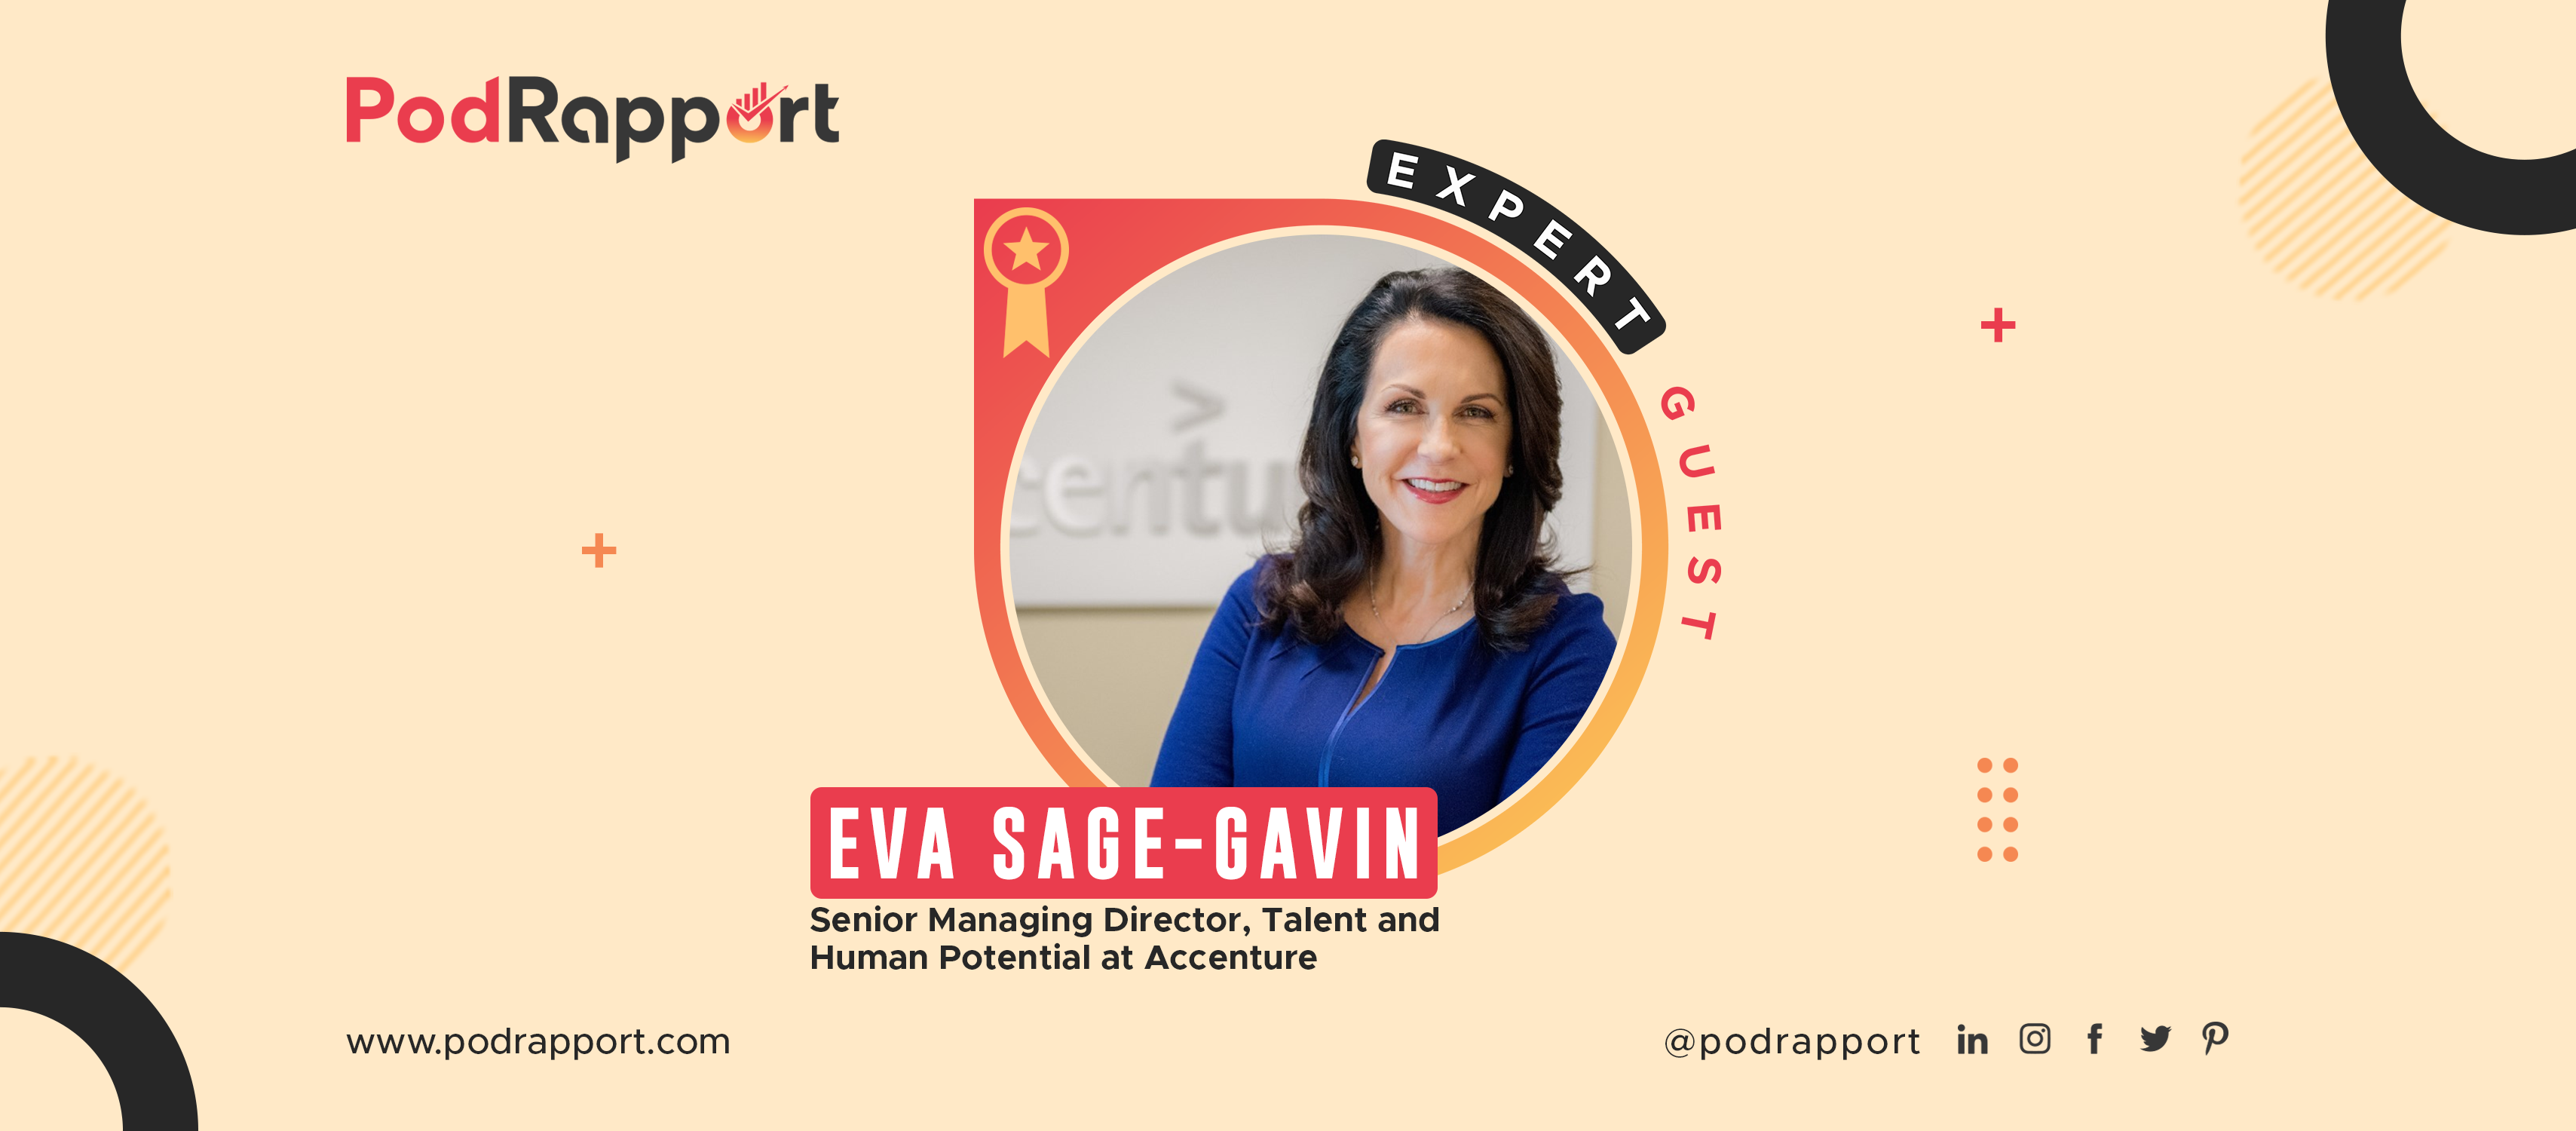 Eva Sage-Gavin